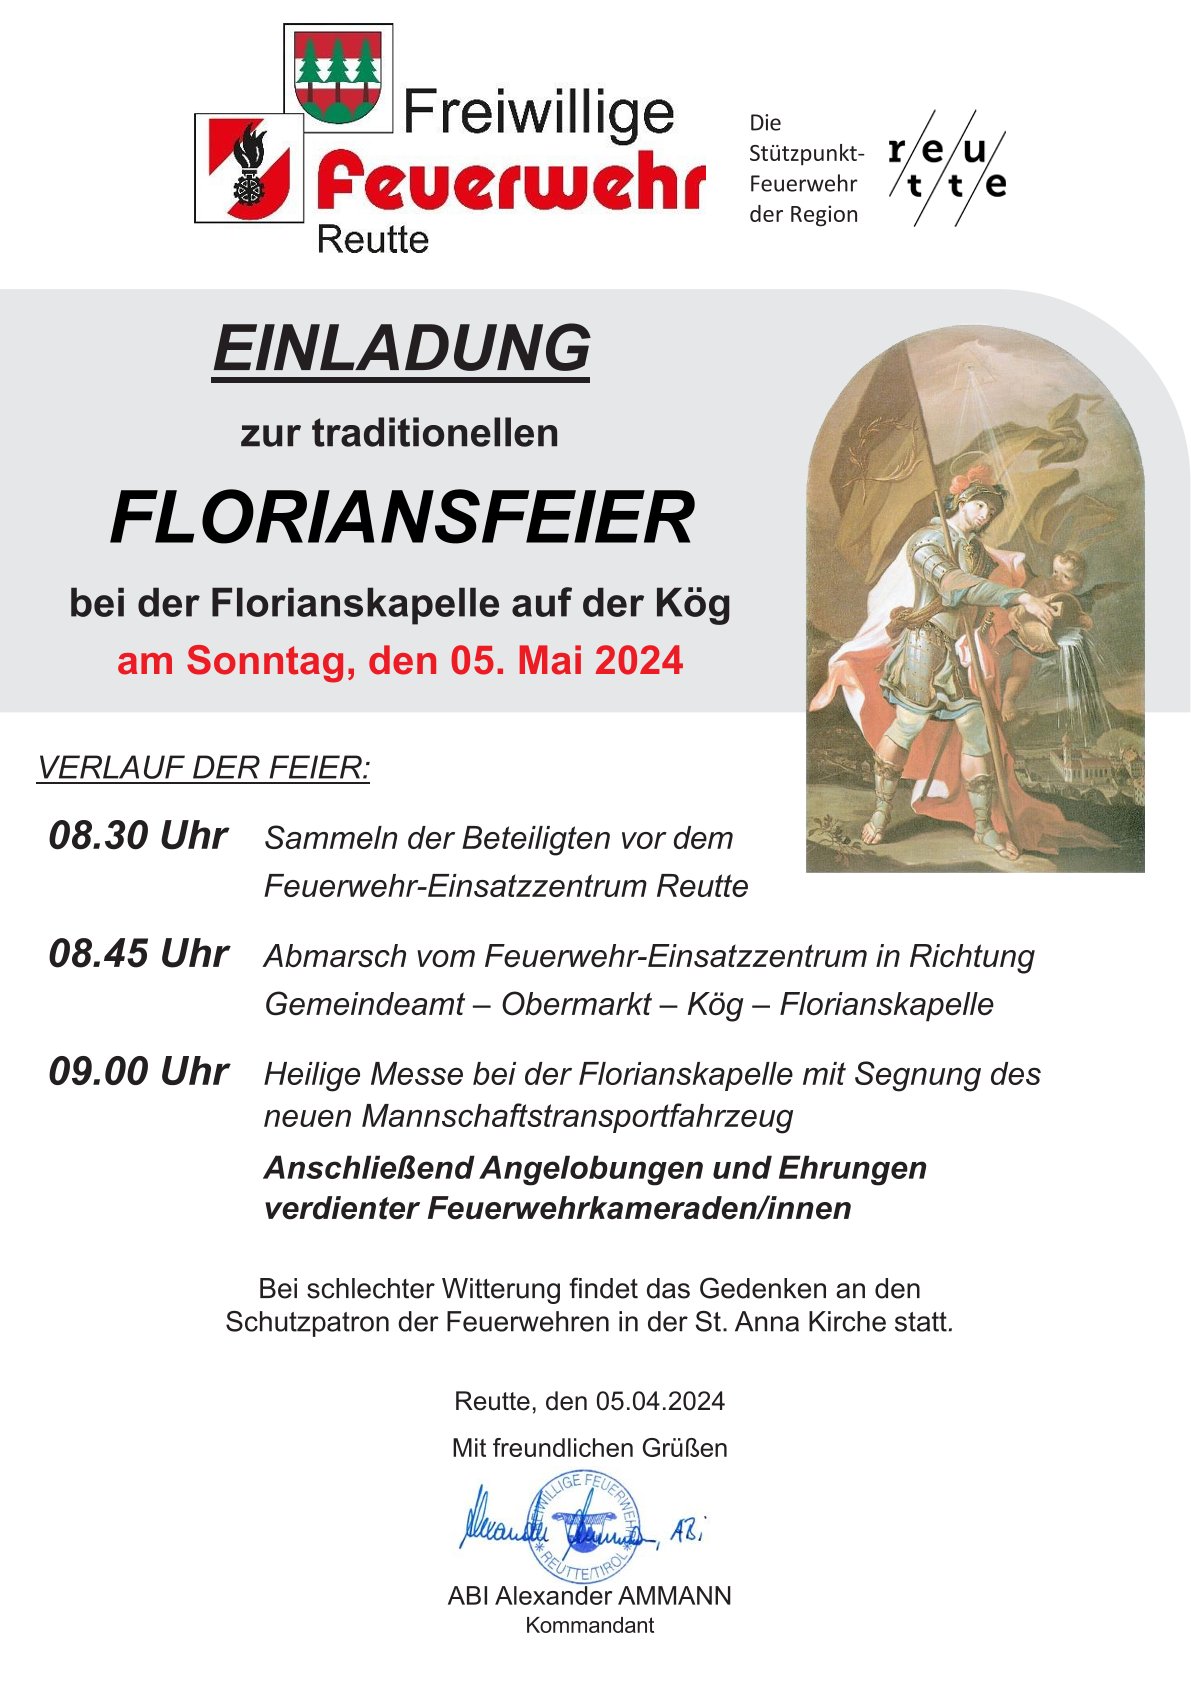 Floriansfeier